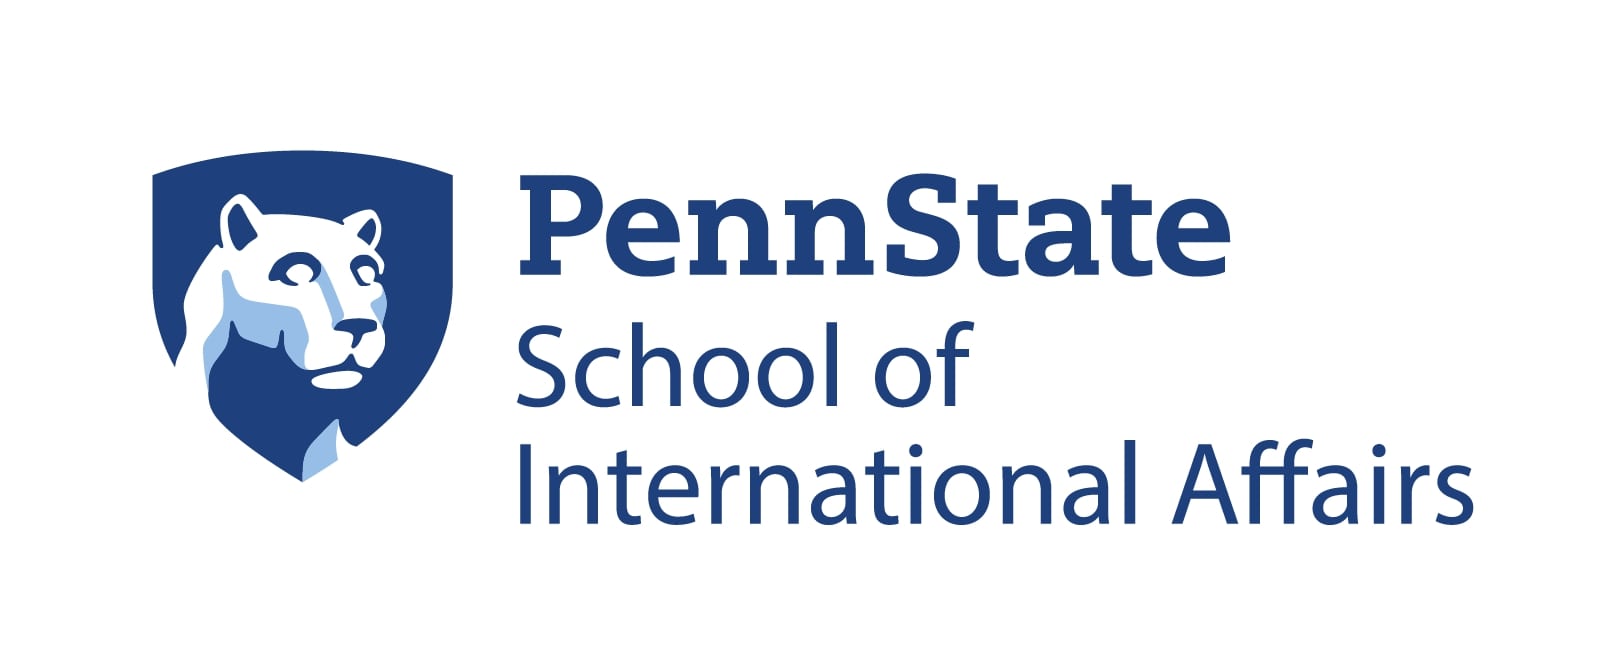 Penn State School of International Affairs